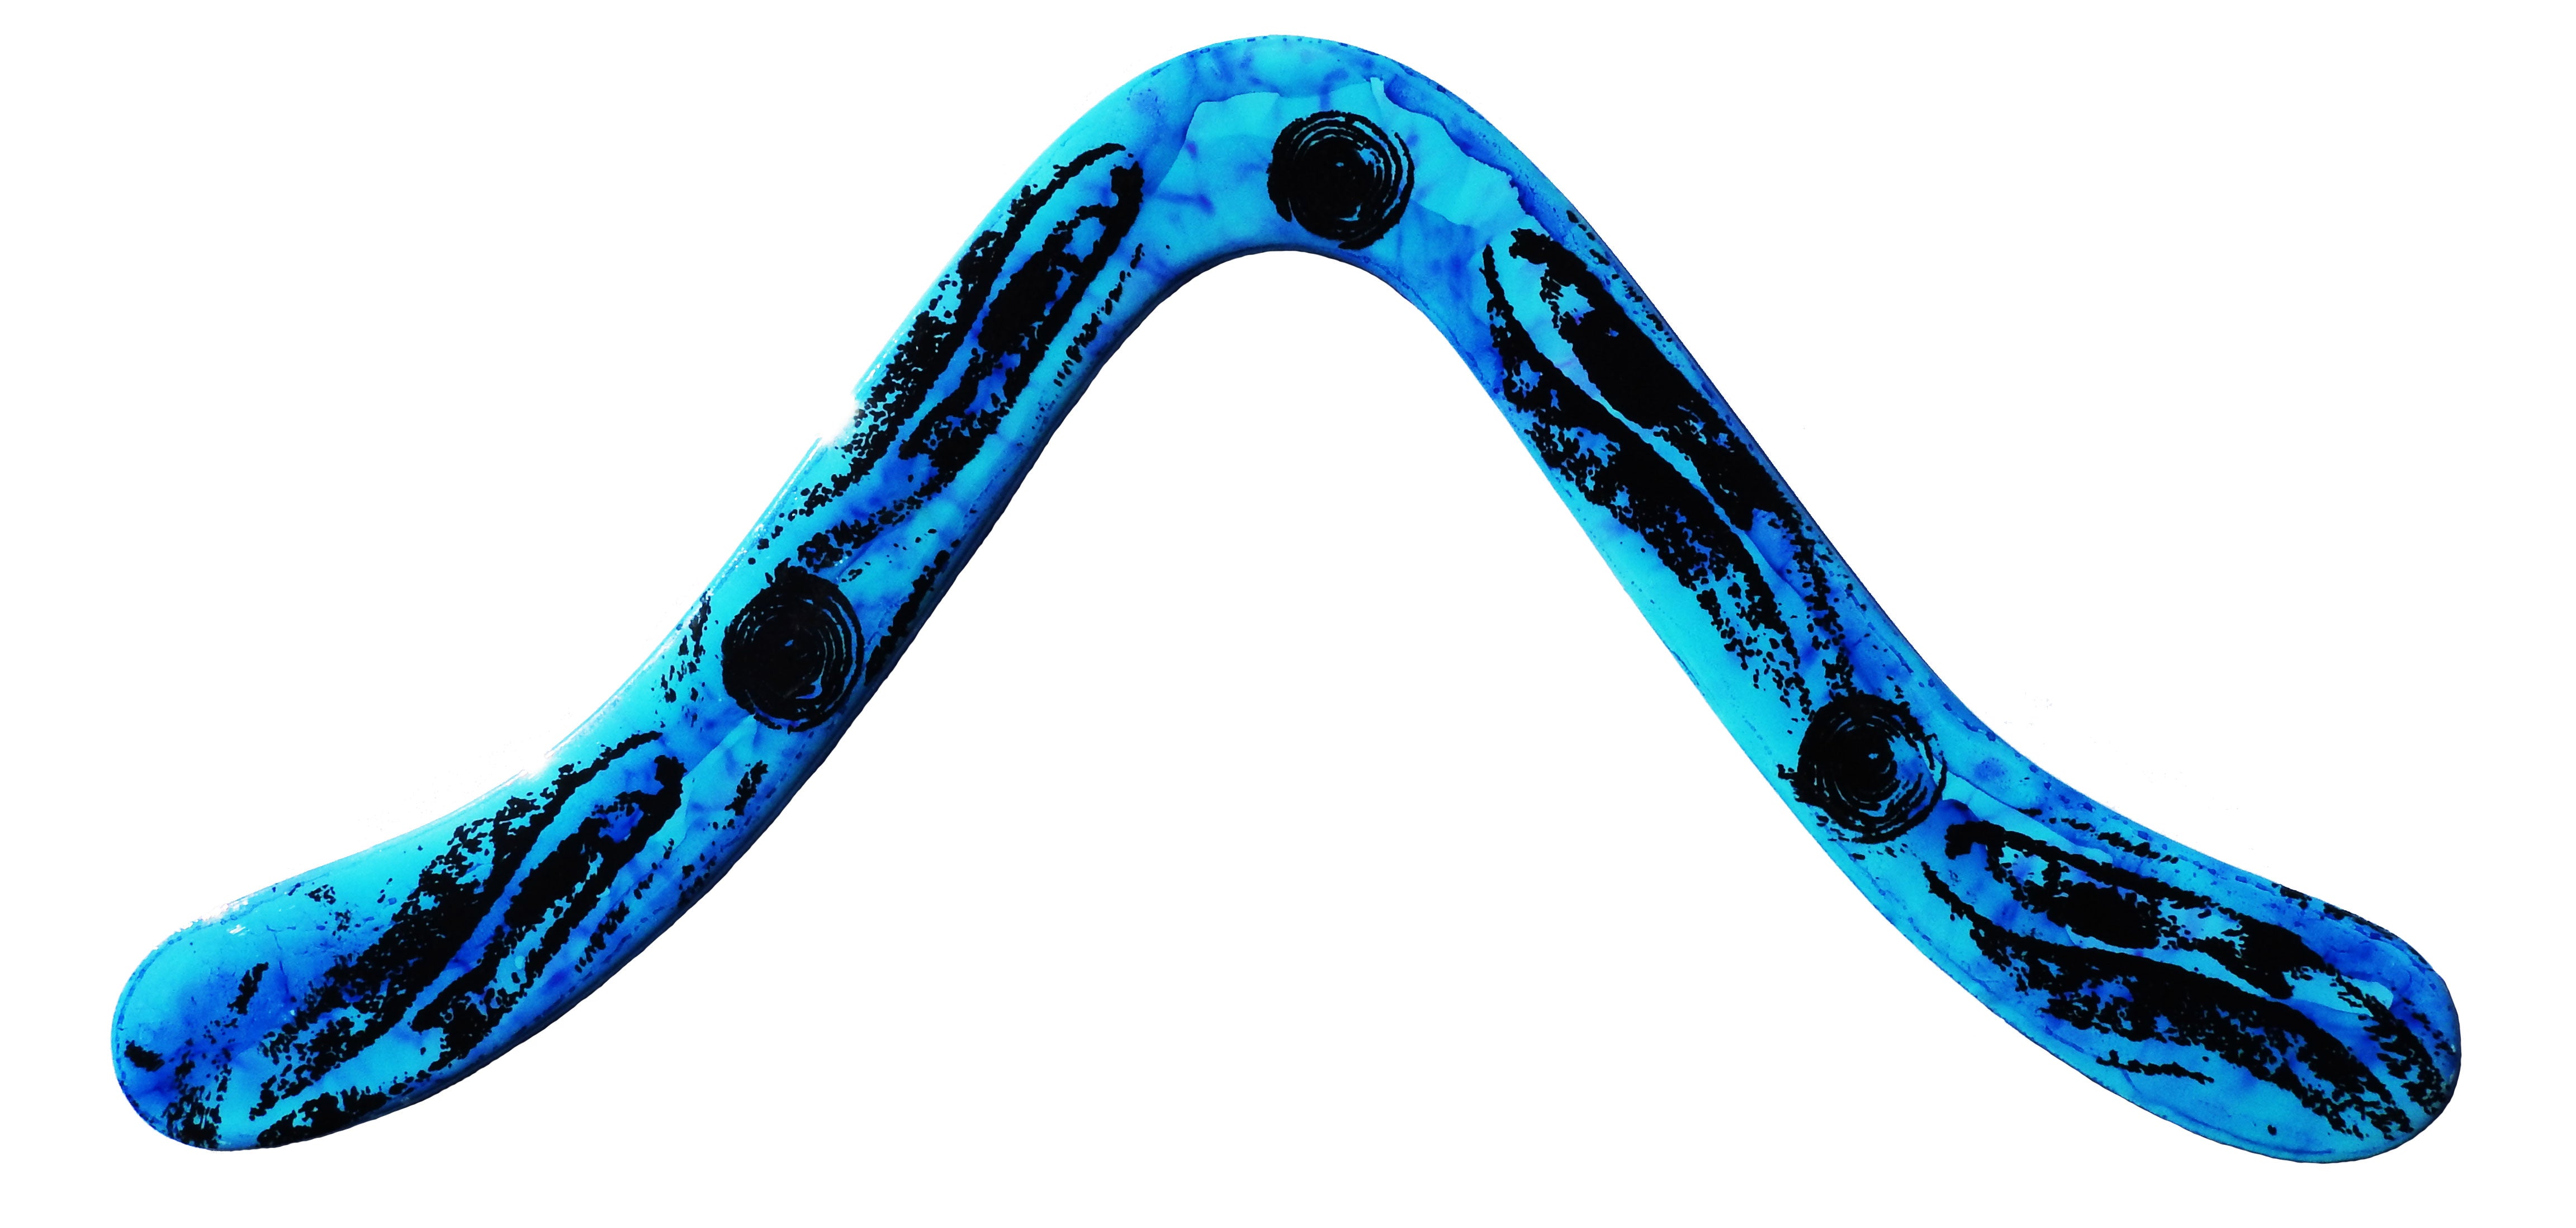 Technic Malibu Boomerang - Molded Carbon Fiber / Plastic Composite Boomerangs! - boomerangs-com